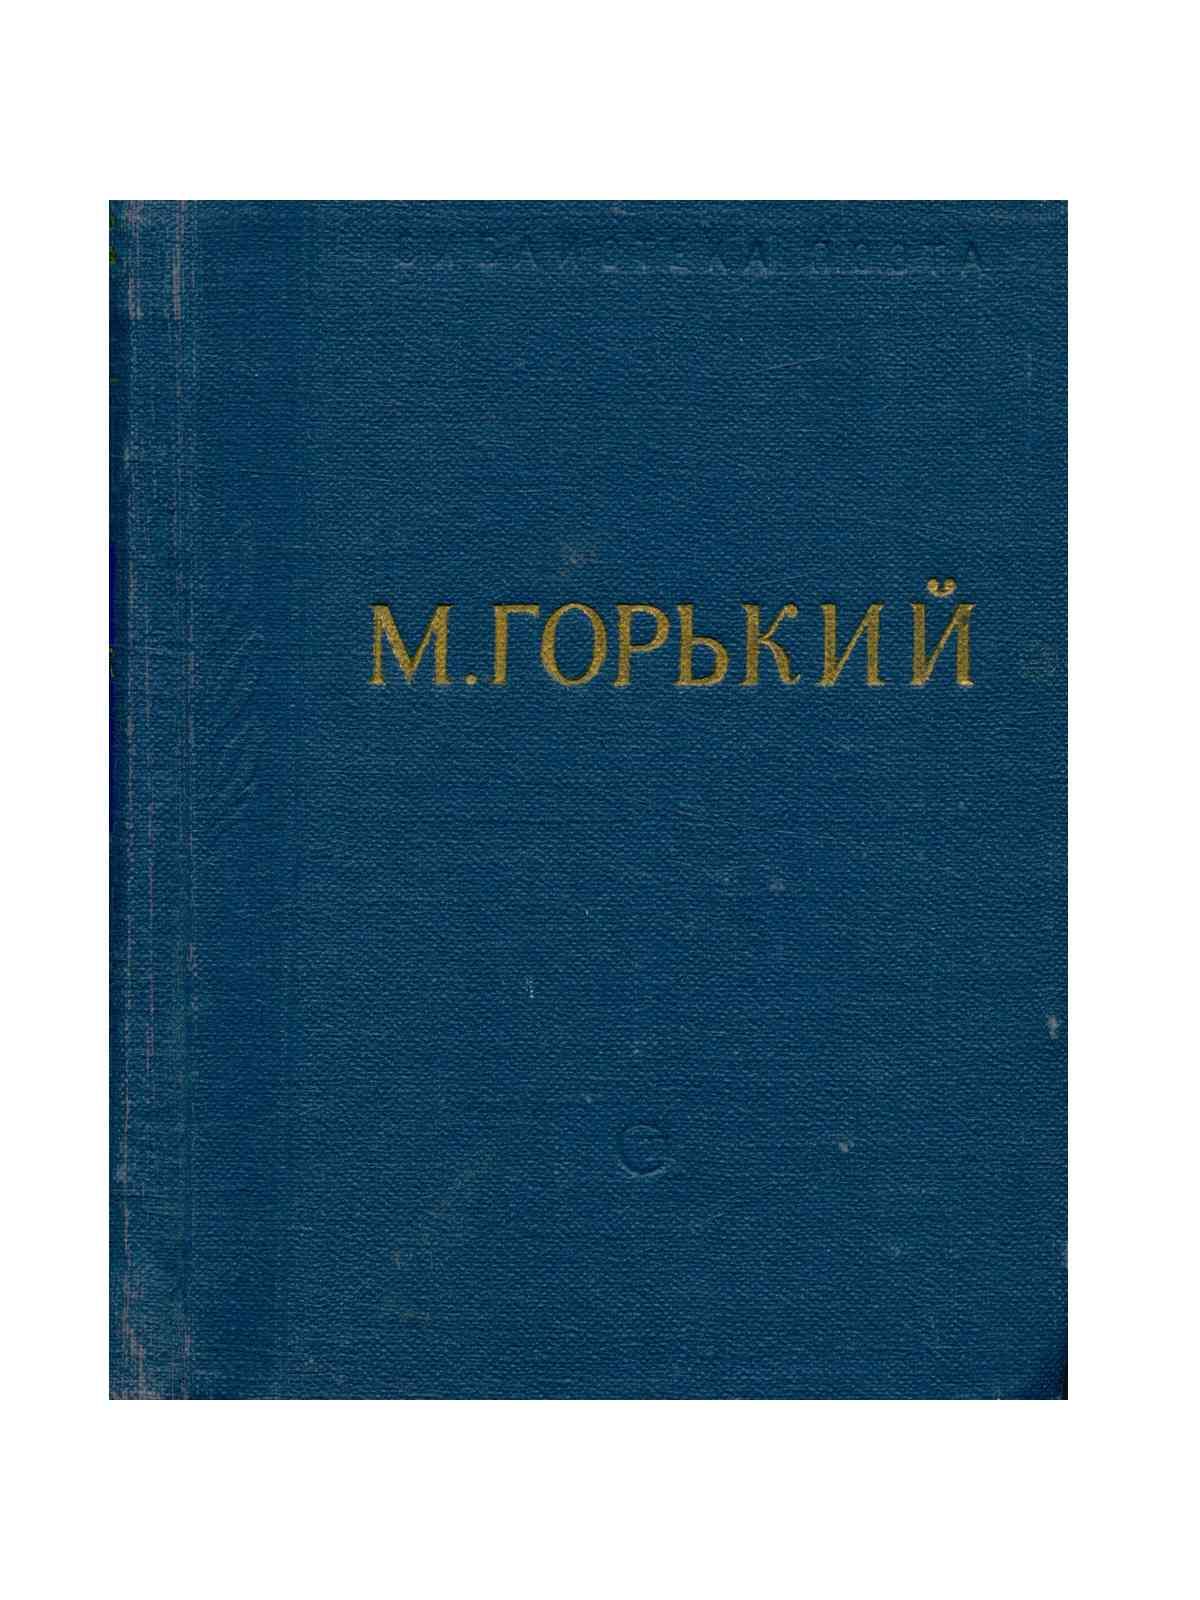 М горький стихи. Горький стихи 1920-1930.